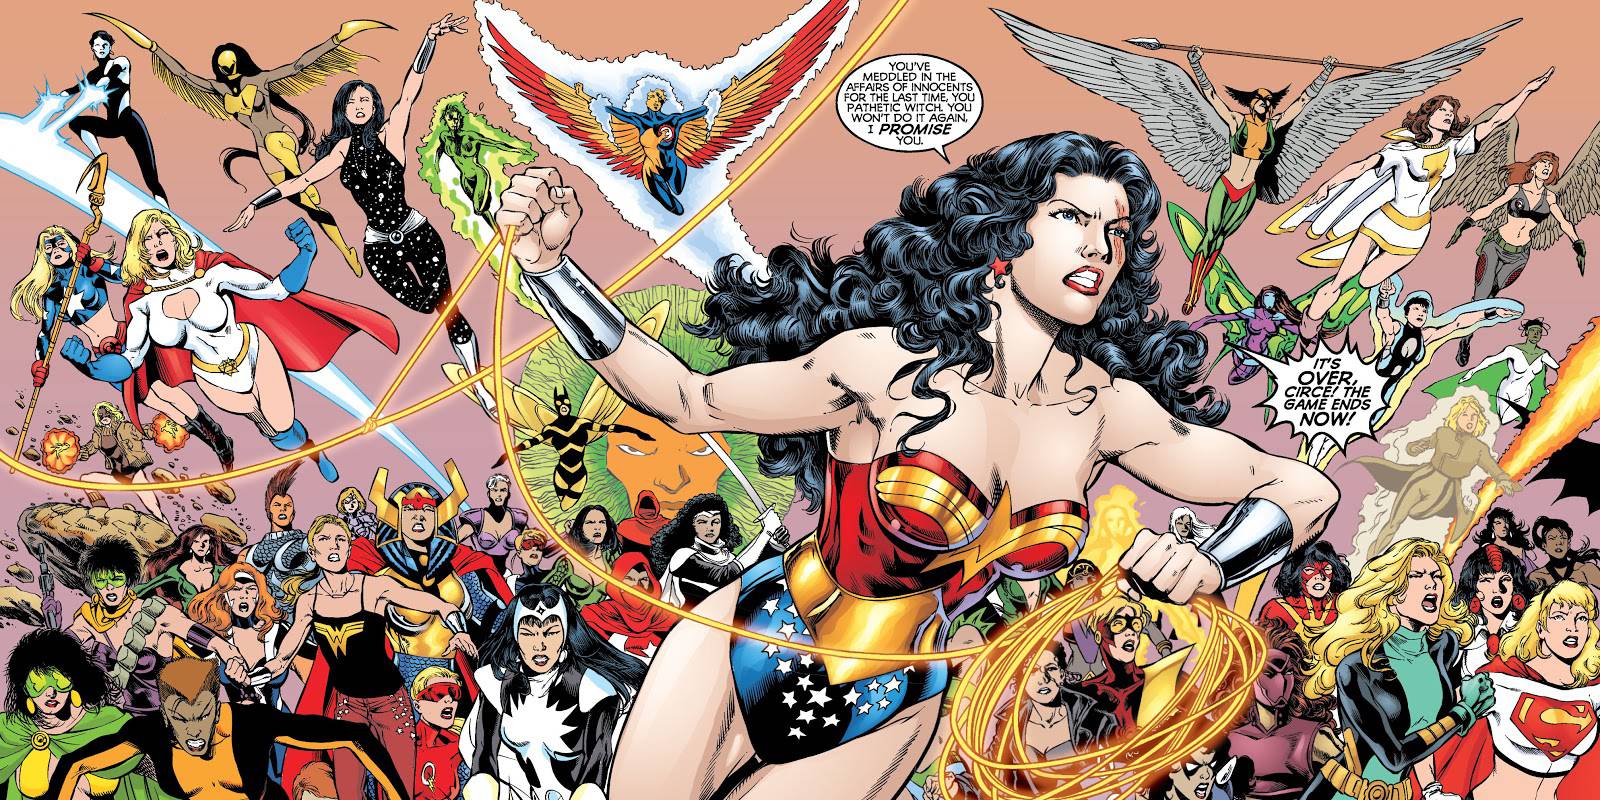 Wonder Woman vs Circe